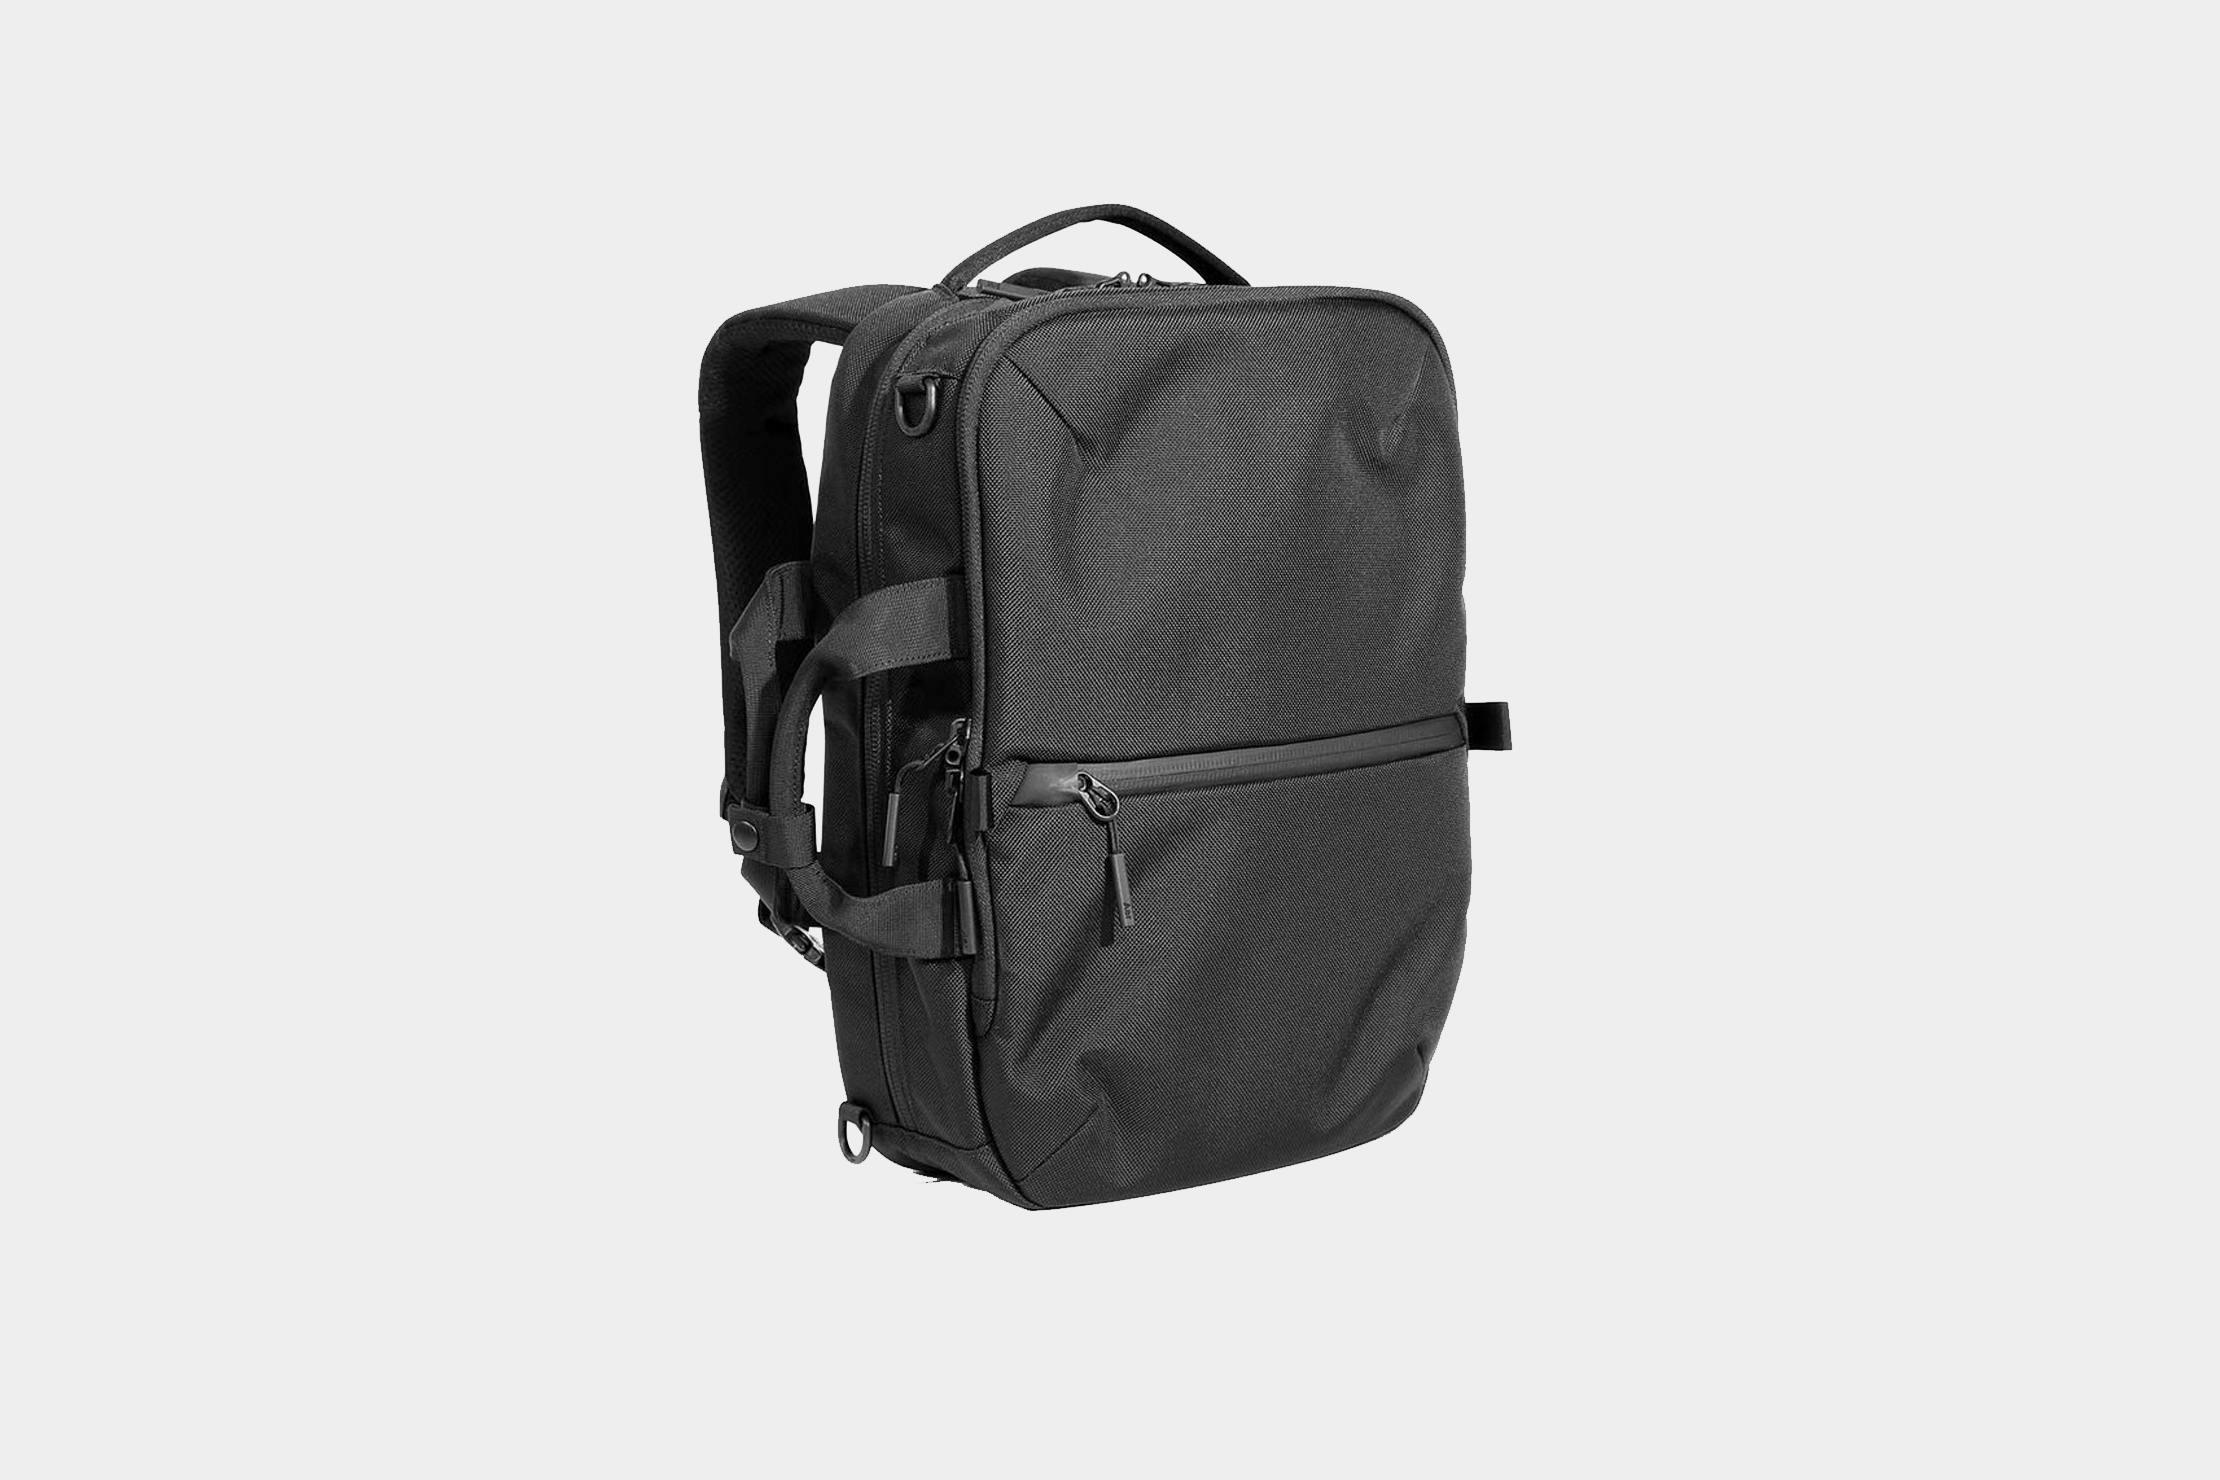 Aer Flight Pack Travel Backpack Review | Pack Hacker